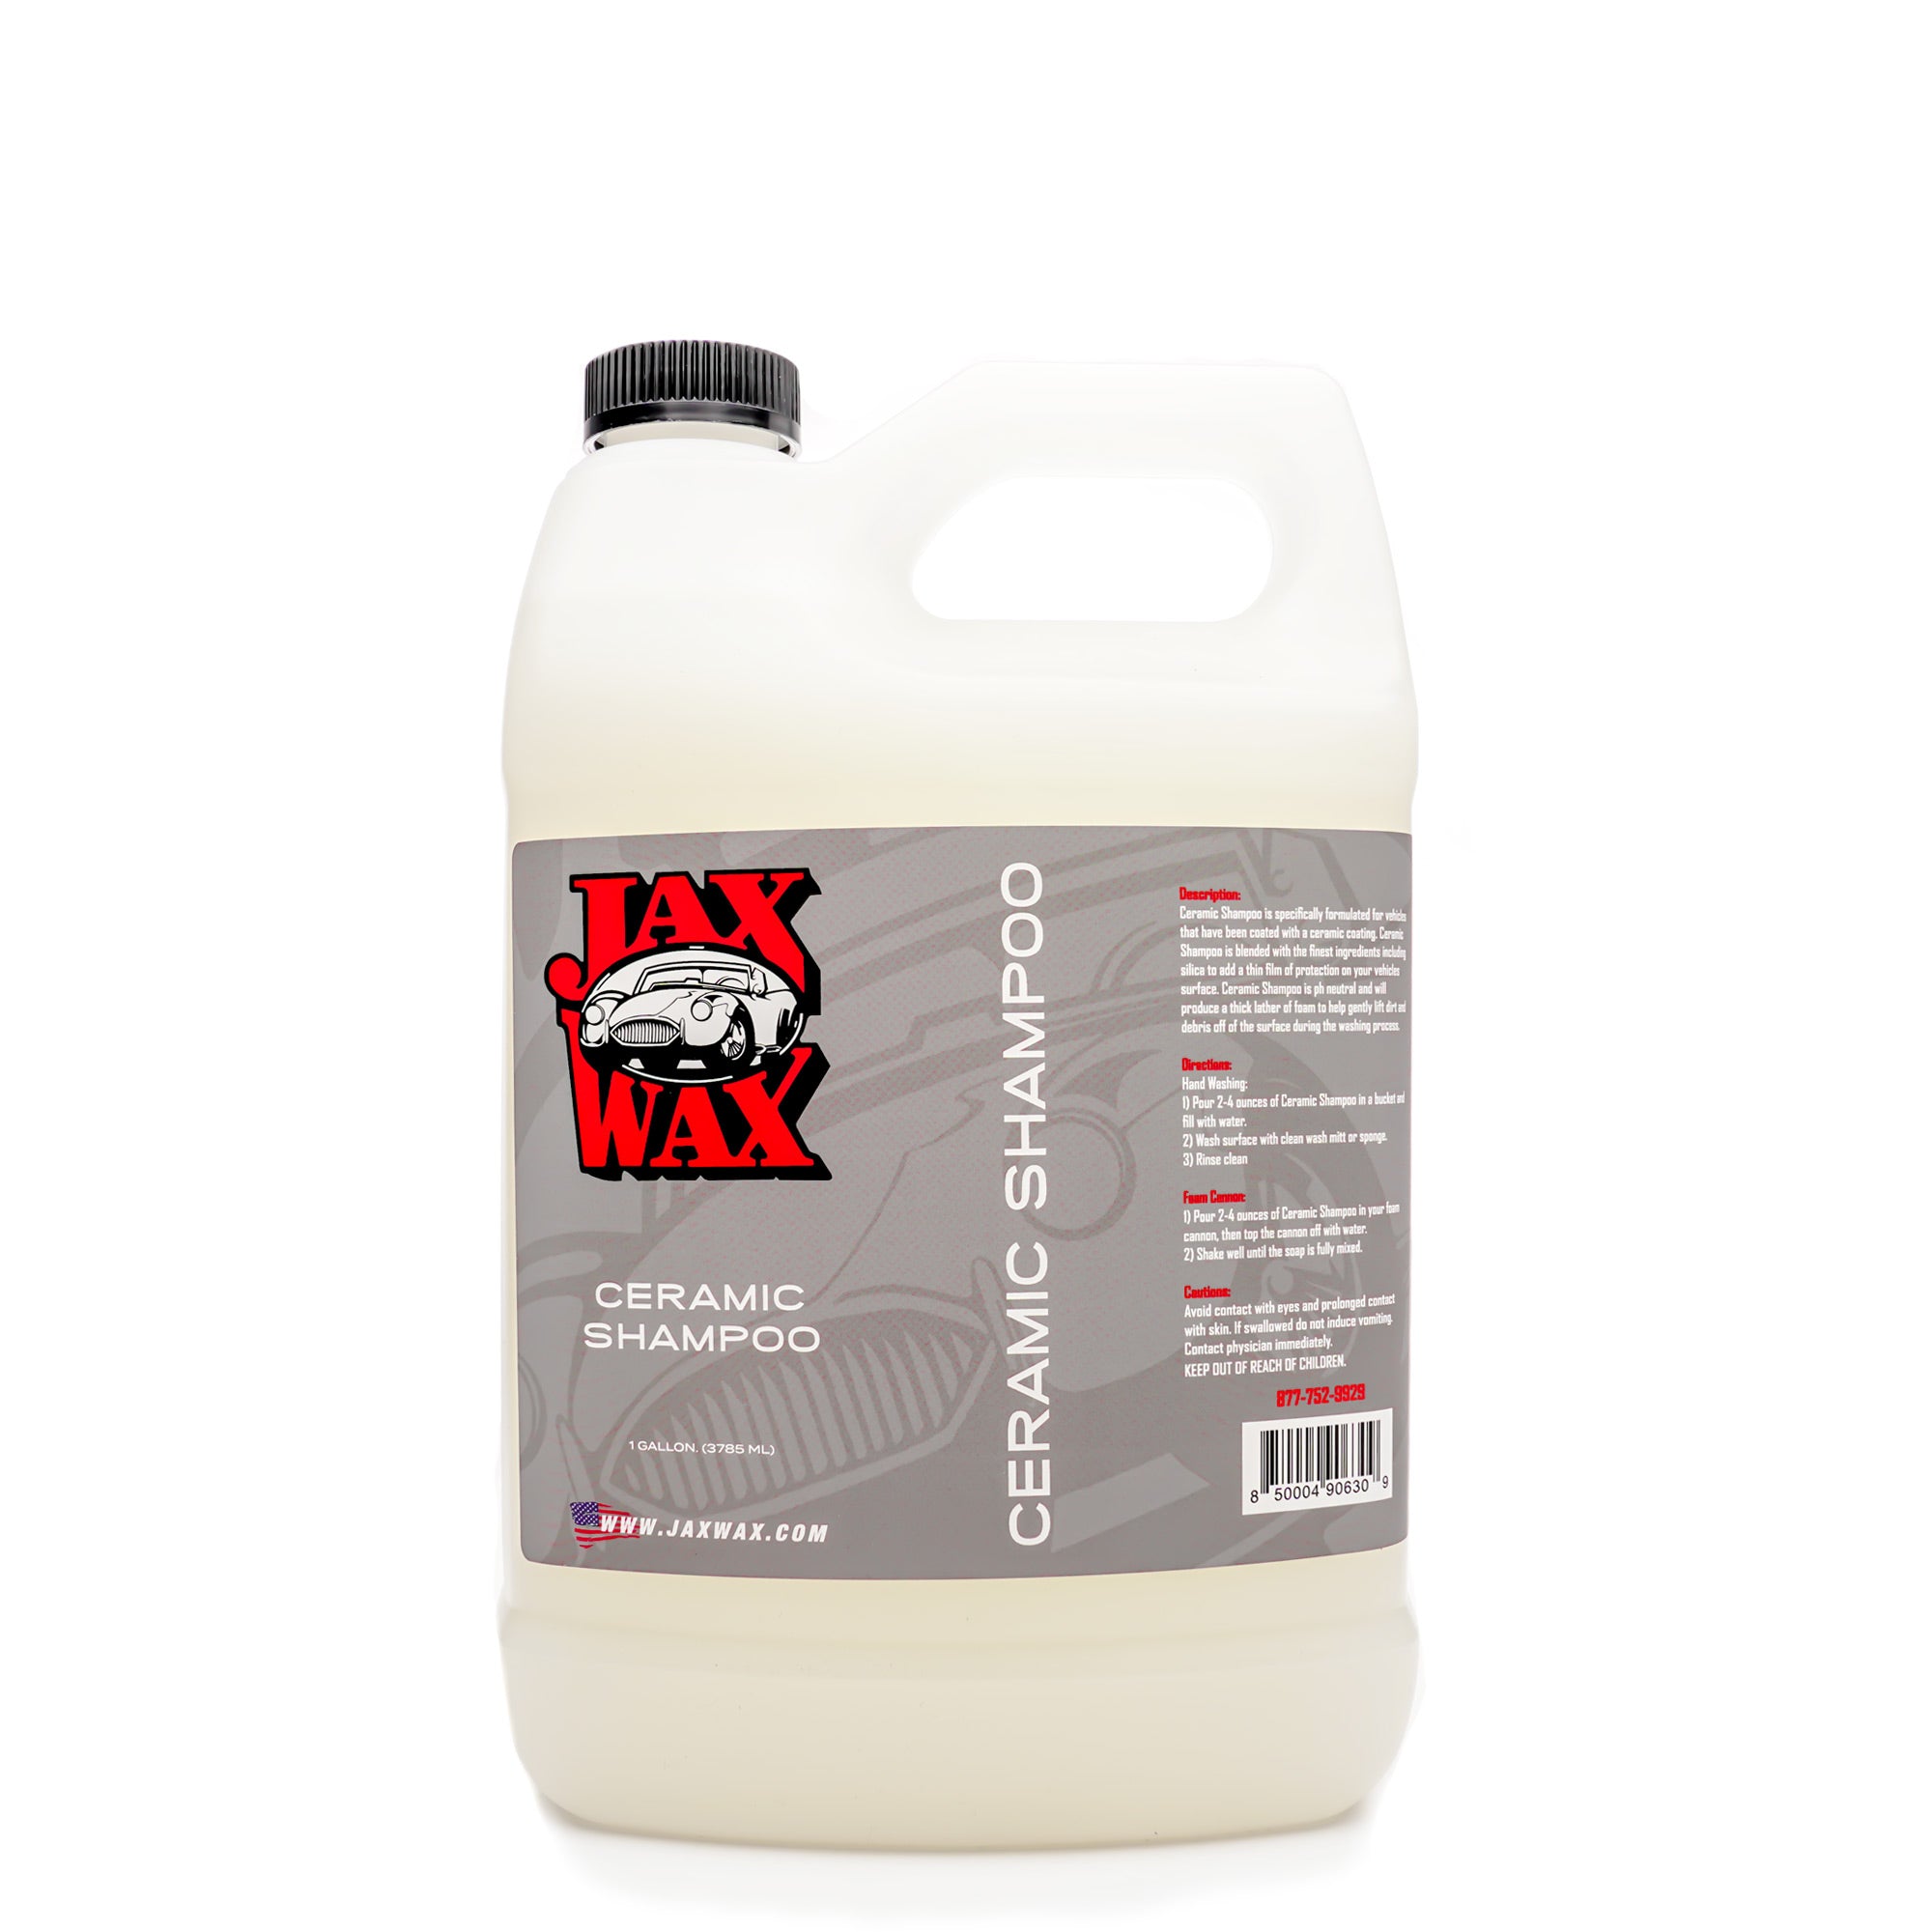 Jax Wax, Ceramic Shampoo, Ceramic Coating